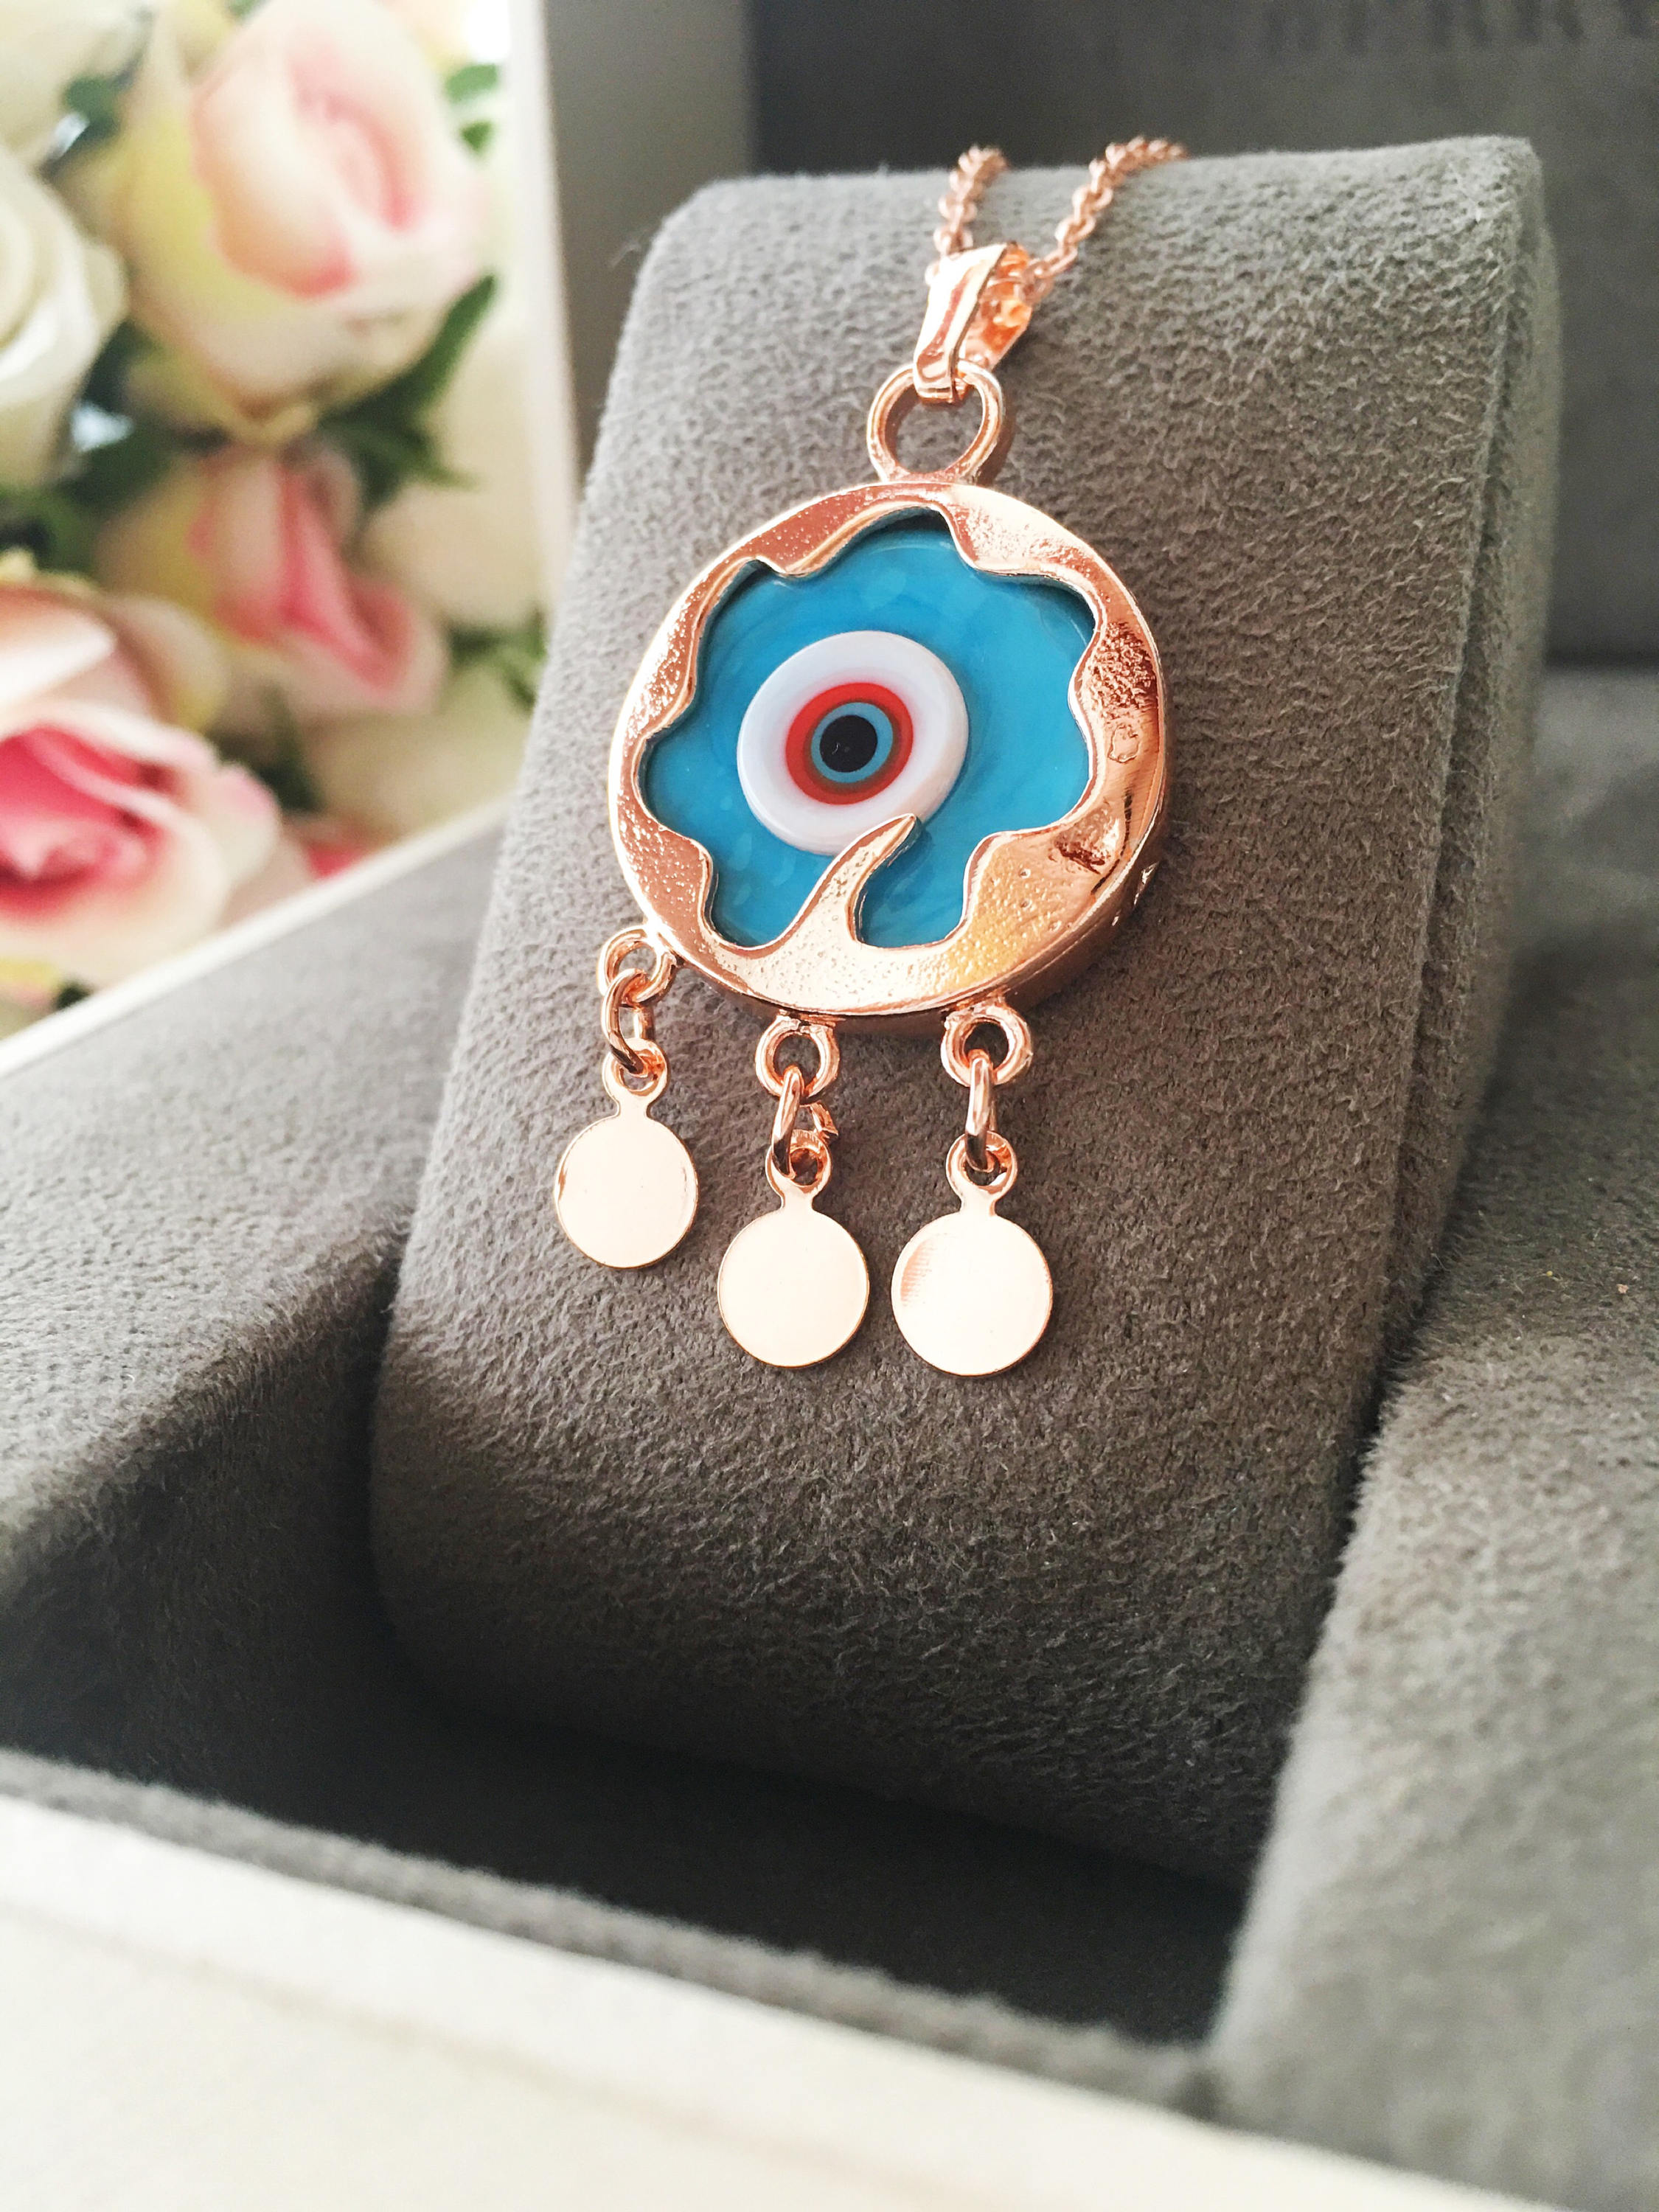 Handmade Murano Glass Evil Eye Necklace with Rose Gold Chain - Adjustable Length 50cm - Turkish Nazar Boncuk Jewelry - Jewelry & Watches - Bijou Her -  -  - 